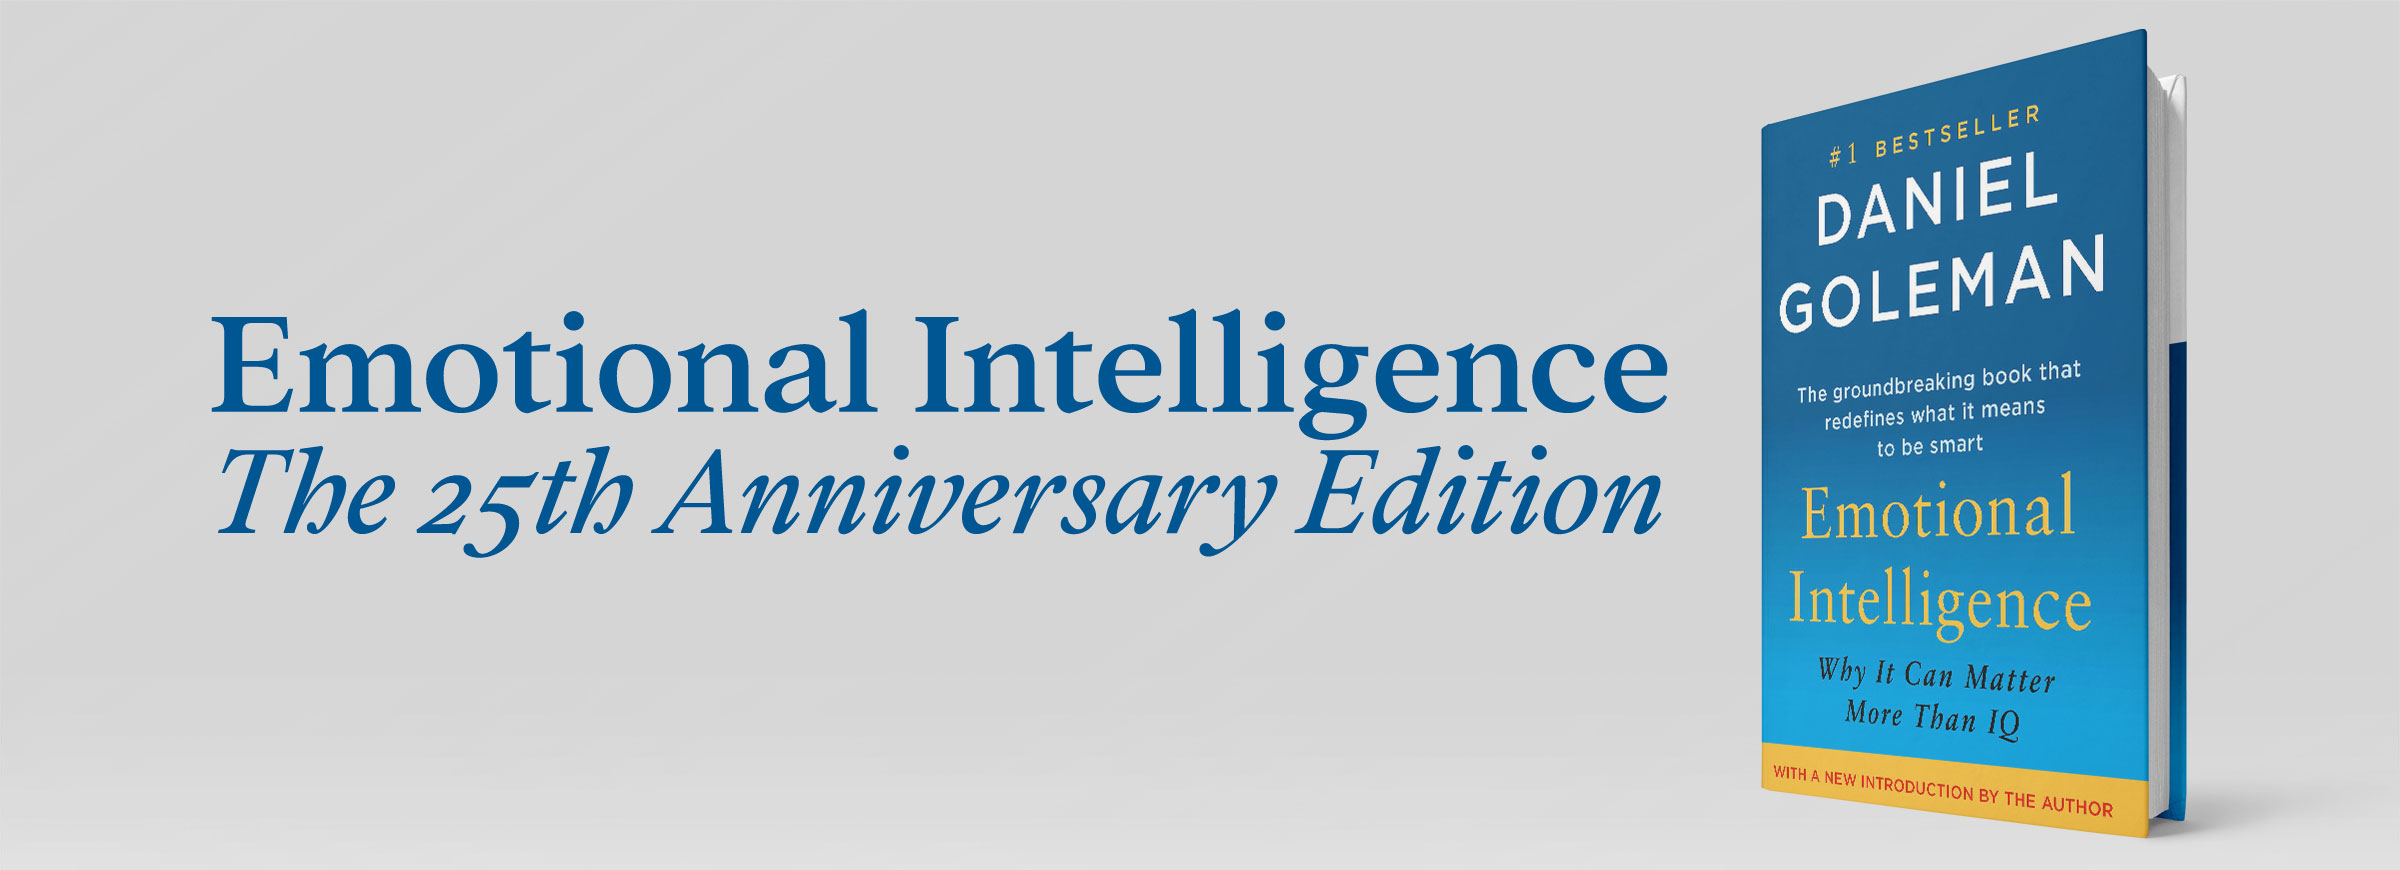 Daniel Goleman – Emotional Intelligence, Social Intelligence, Ecological Intelligence